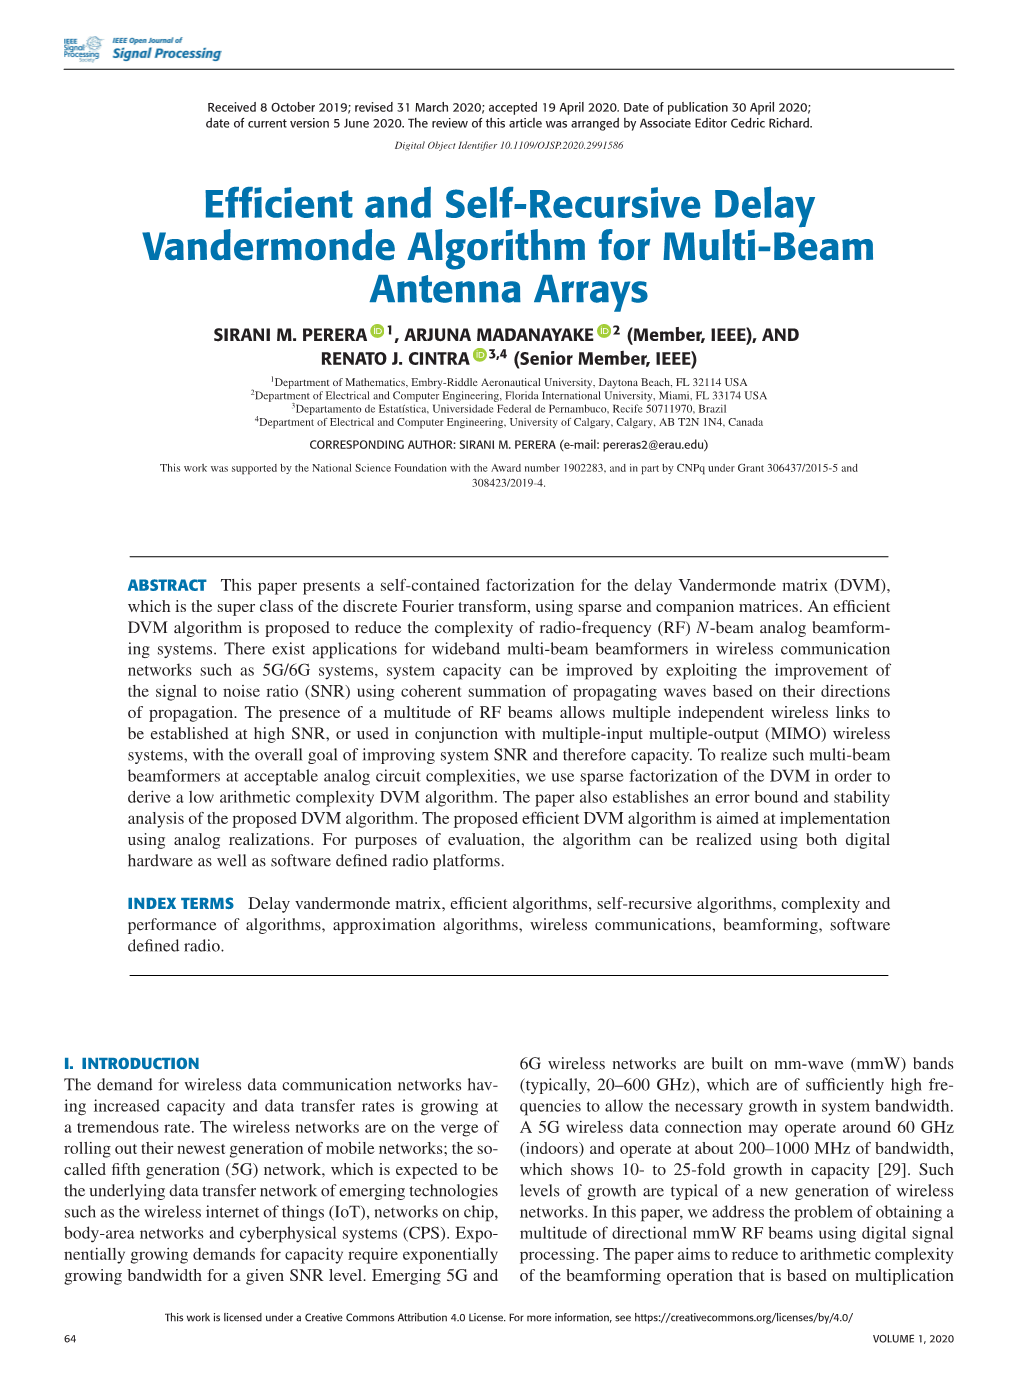 Efficient and Self-Recursive Delay Vandermonde Algorithm for Multi-Beam Antenna Arrays